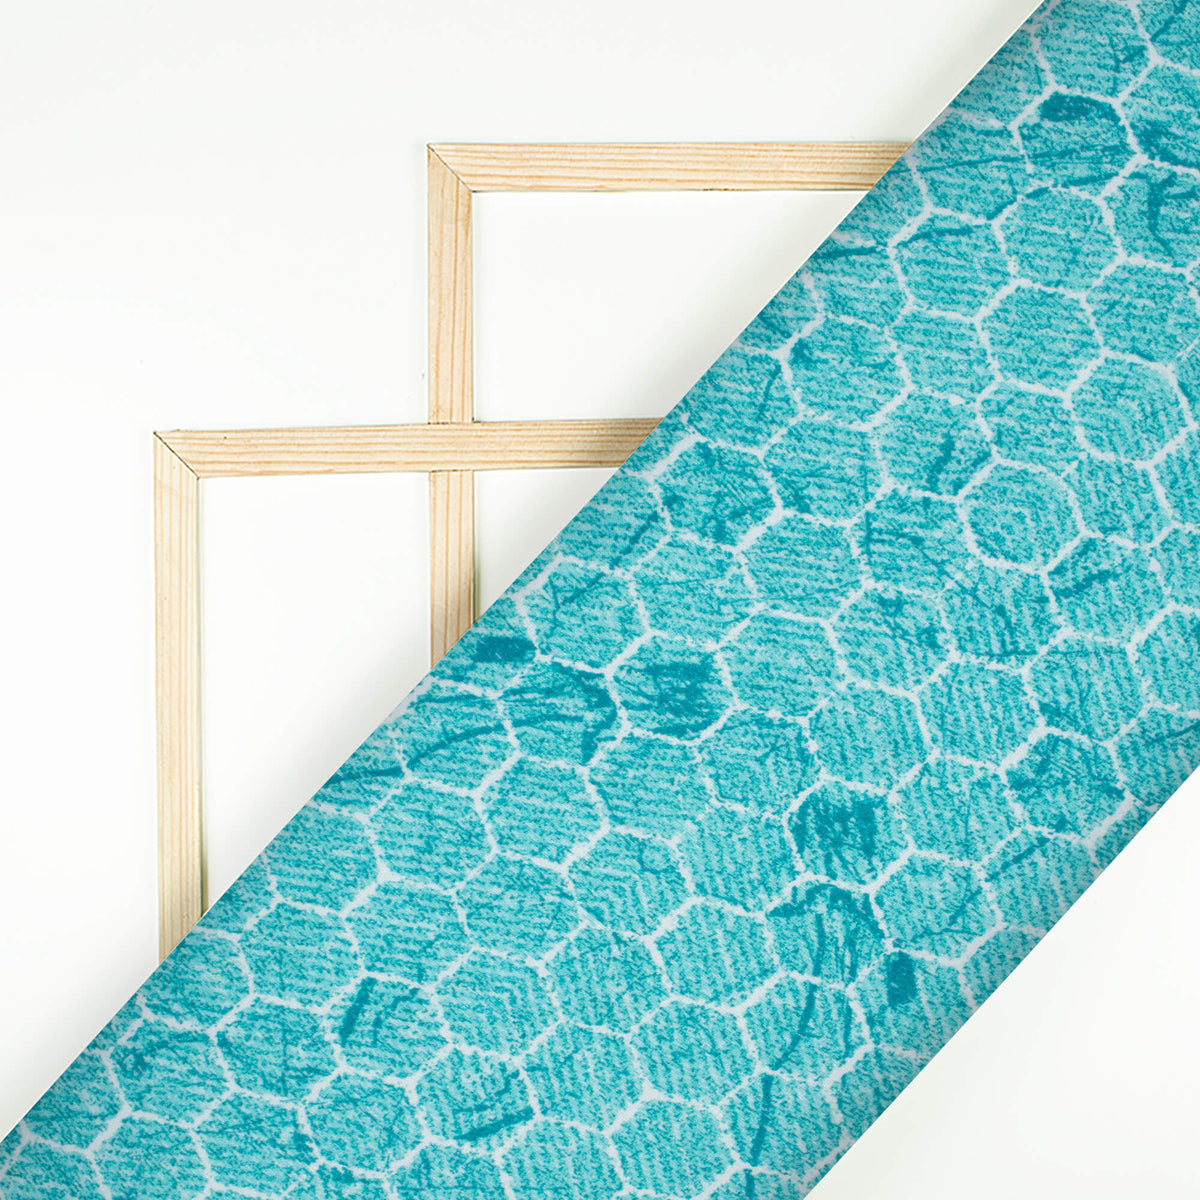 Electric Blue And White Geometric Pattern Digital Print Crepe Silk Fabric